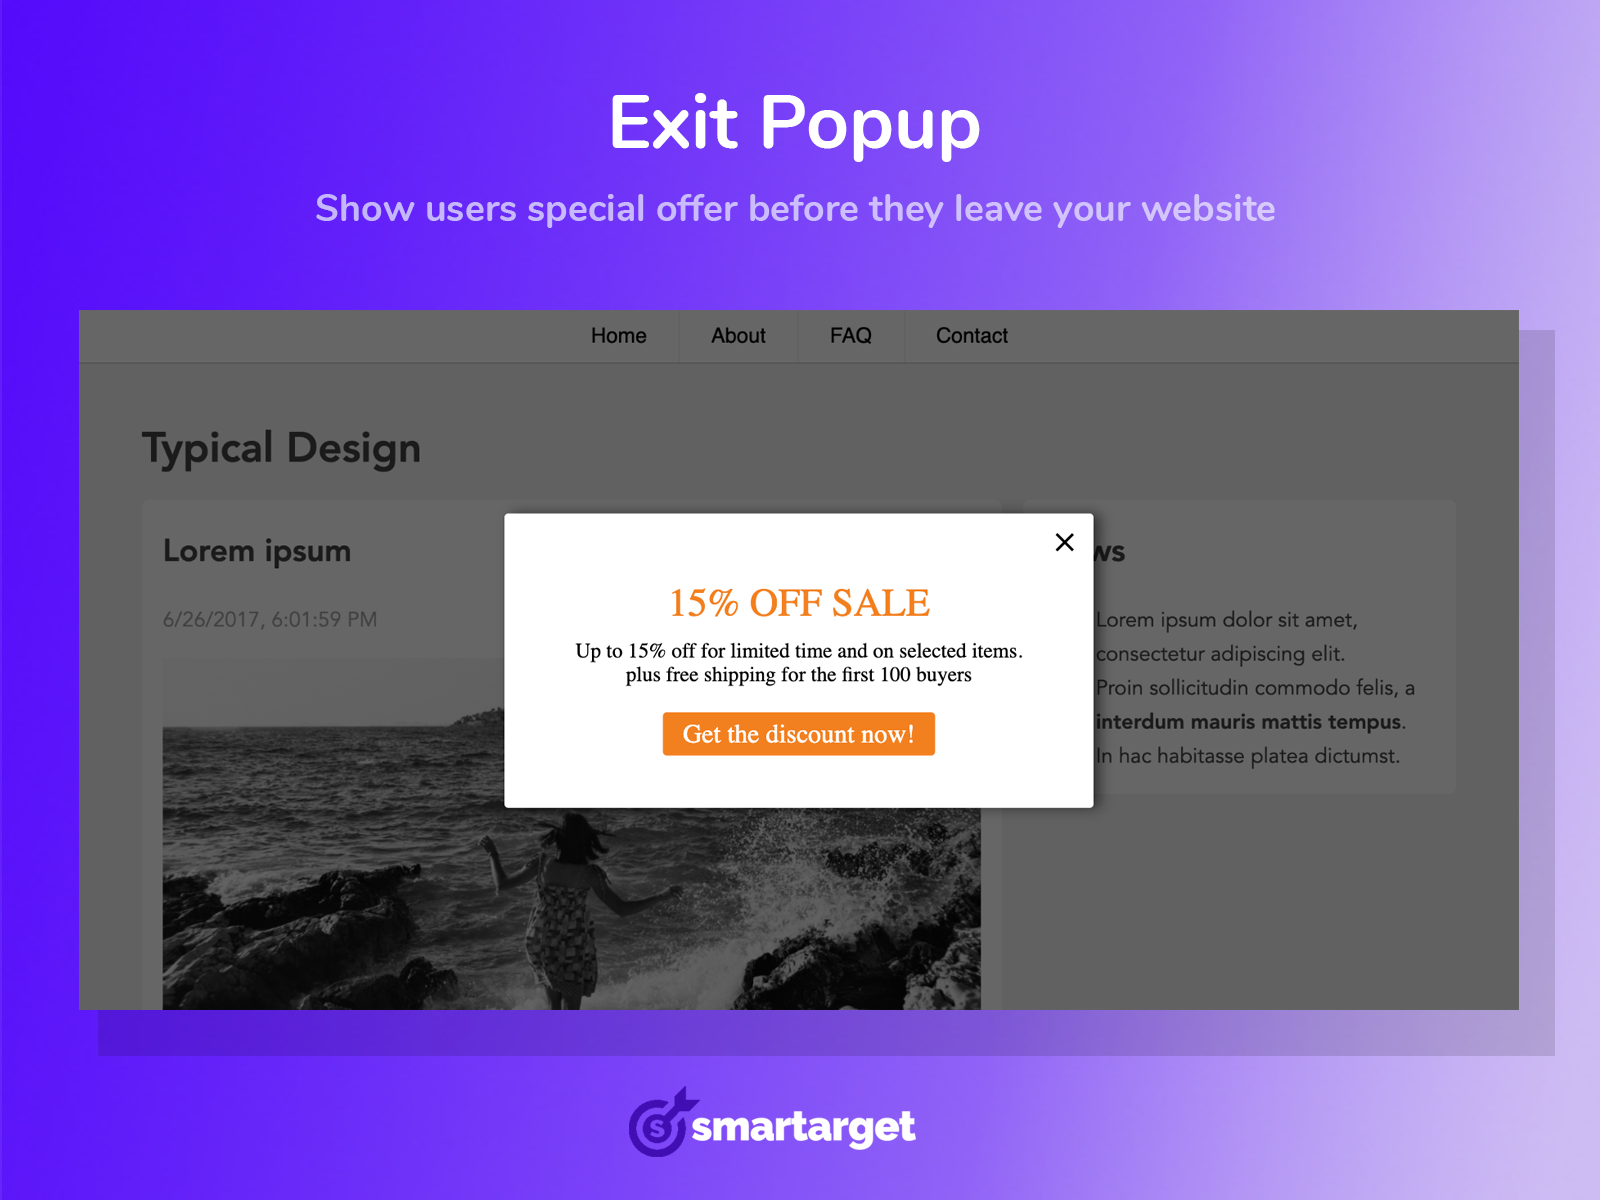 Smartarget - Exit Popup Image